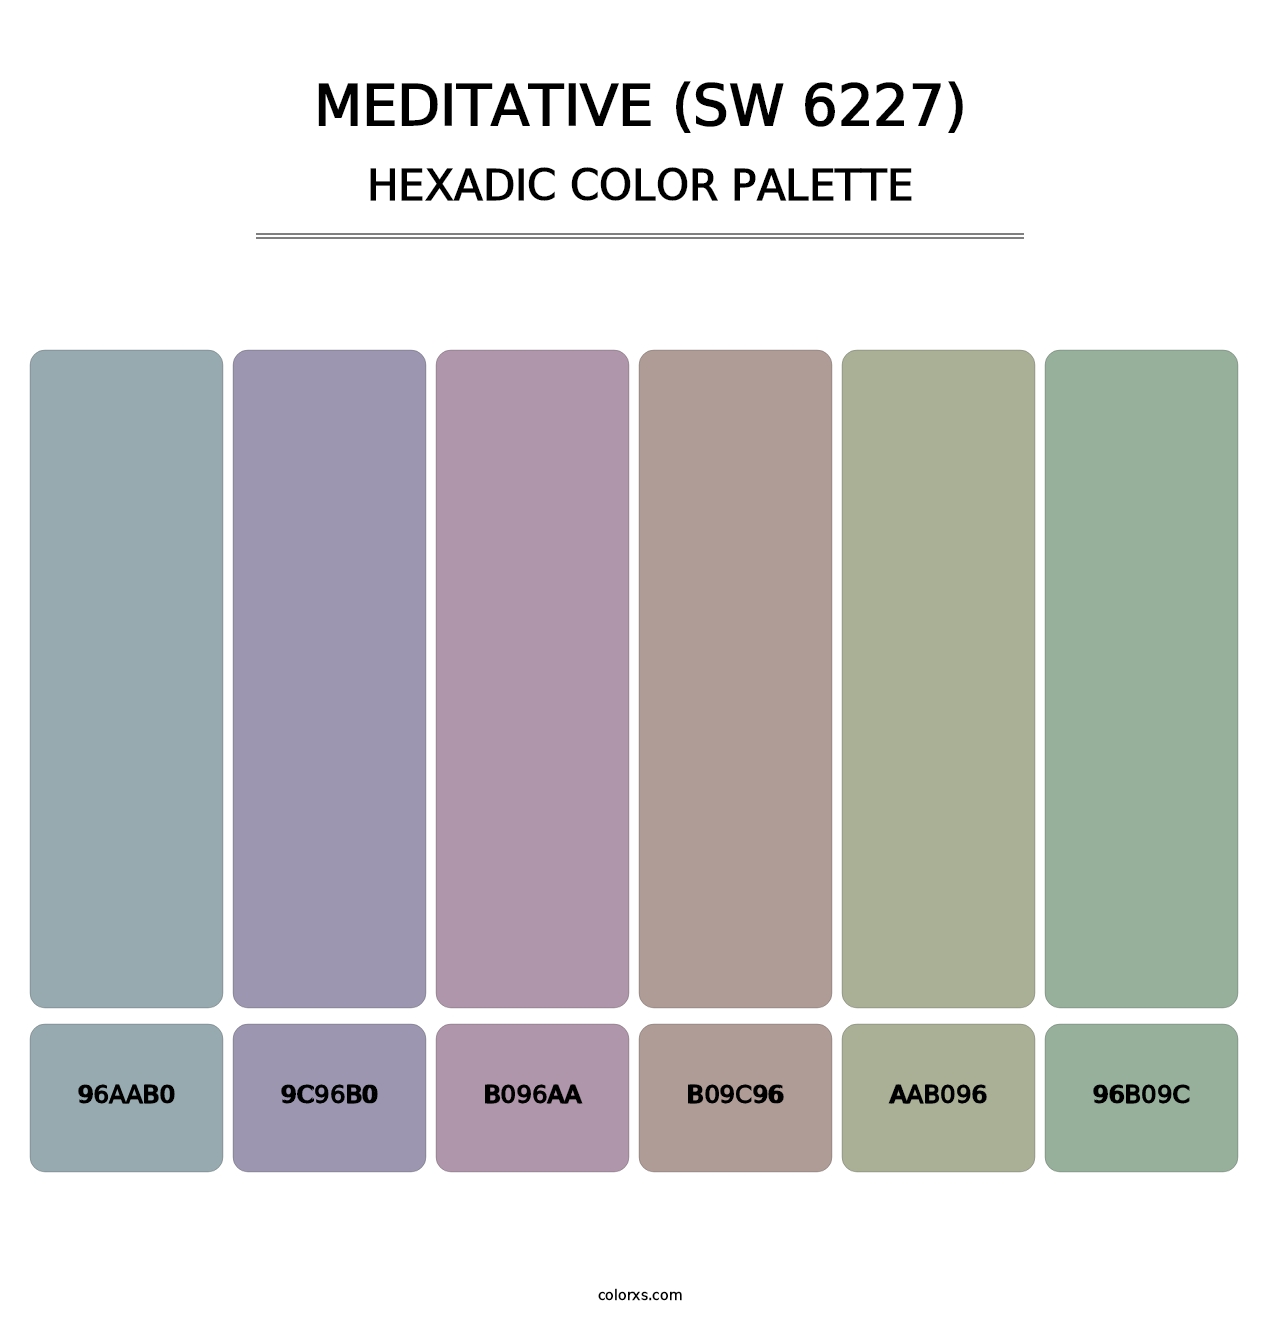 Meditative (SW 6227) - Hexadic Color Palette